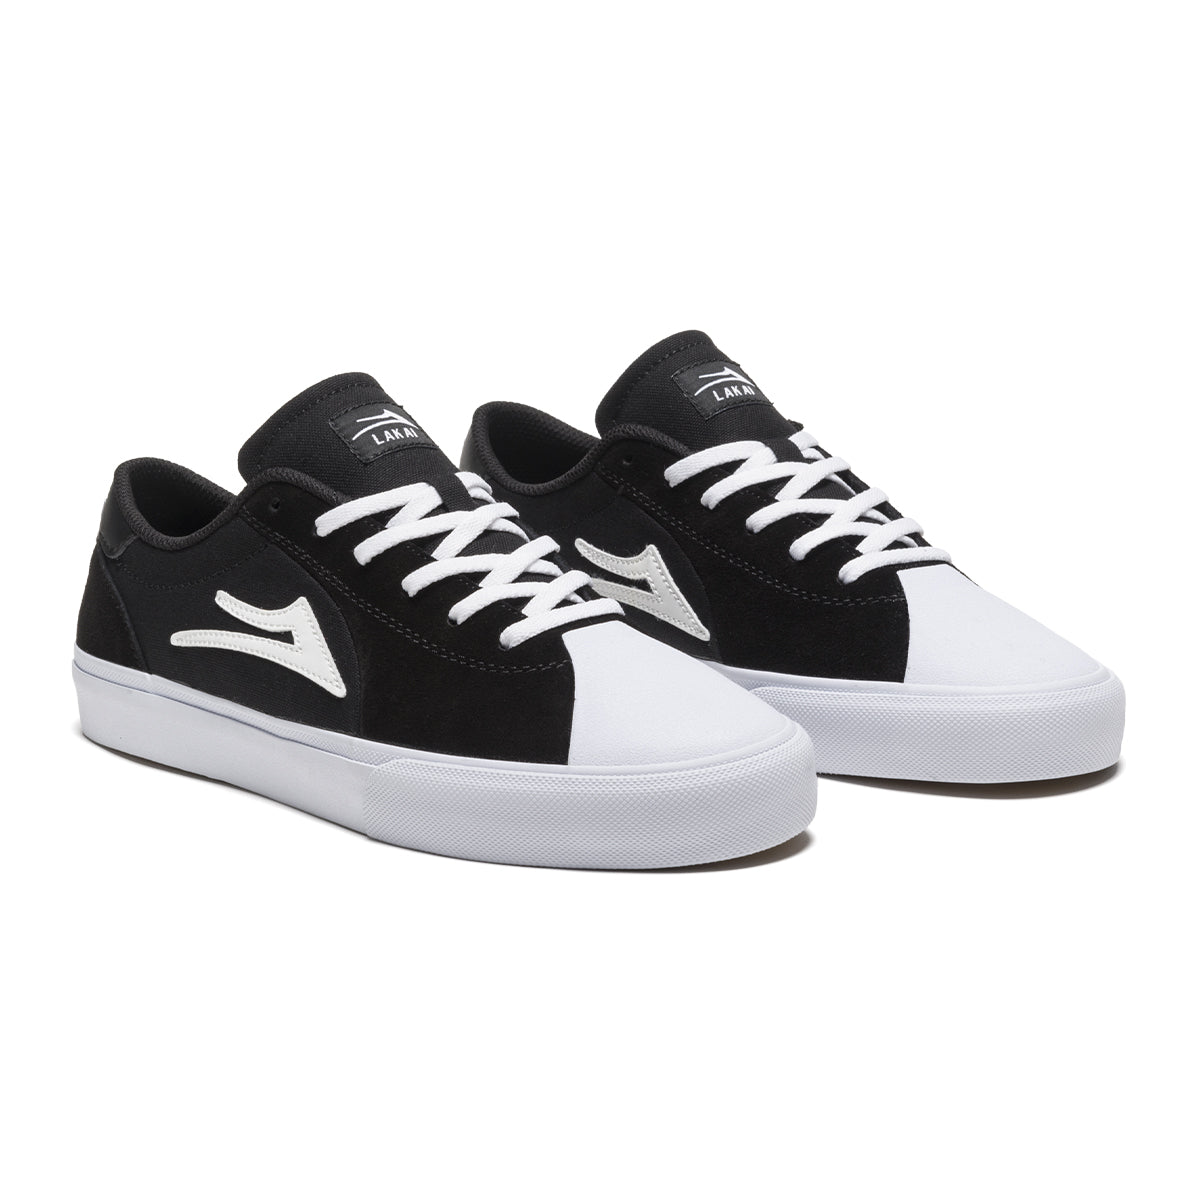 Black/White Flaco II Lakai Skateboard Shoe Front